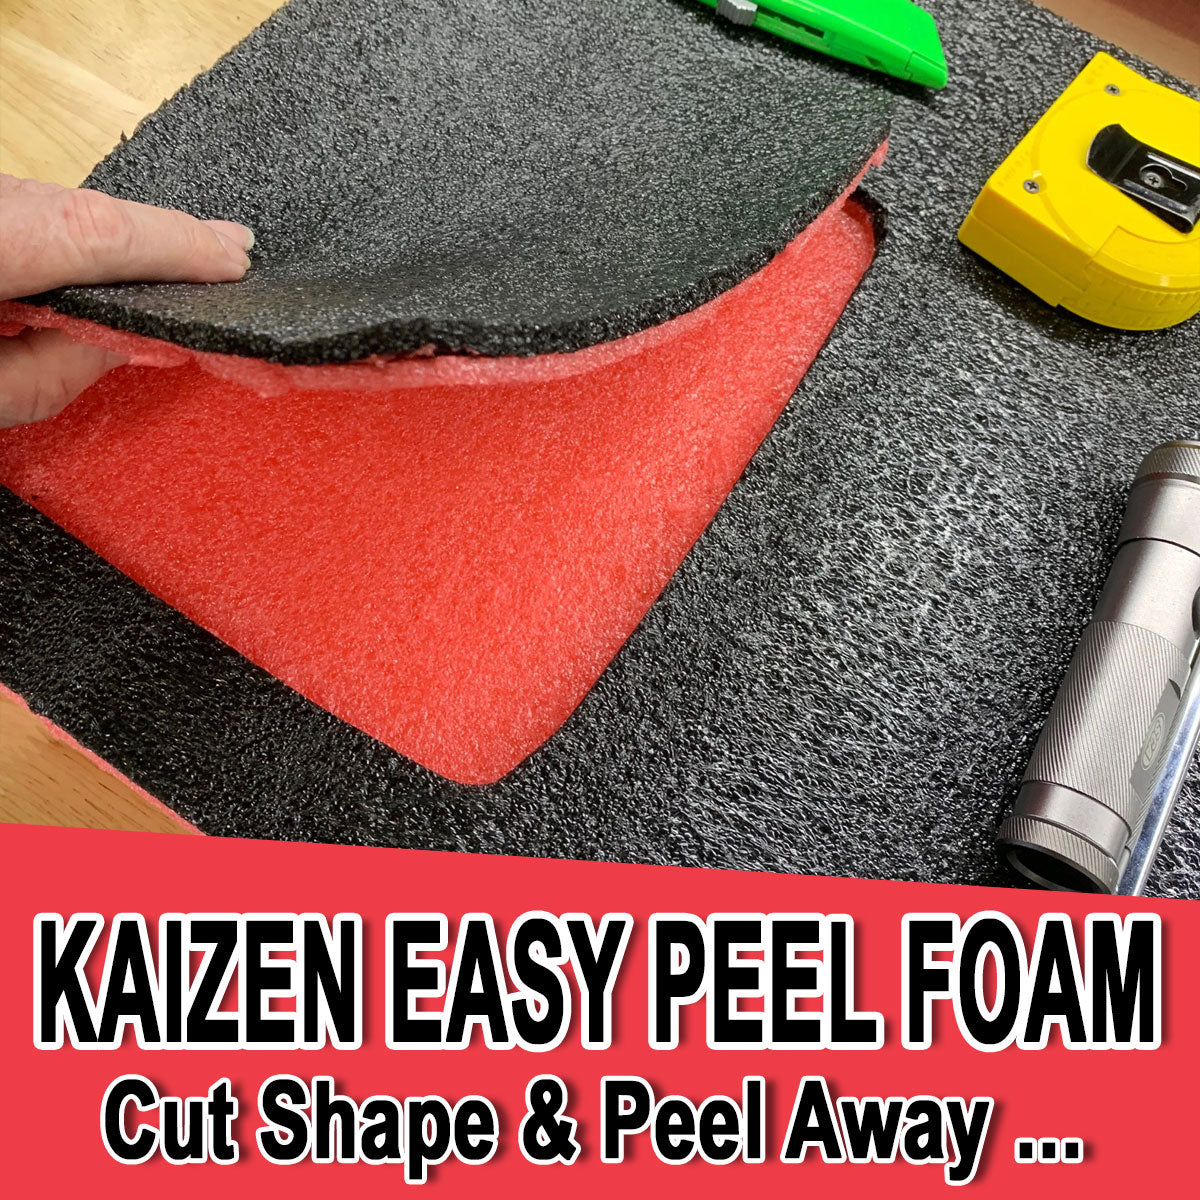 Kaizen DIY Easy Peel Tool Foam (2 pack) 1Mx0.67Mx30mm per sheet